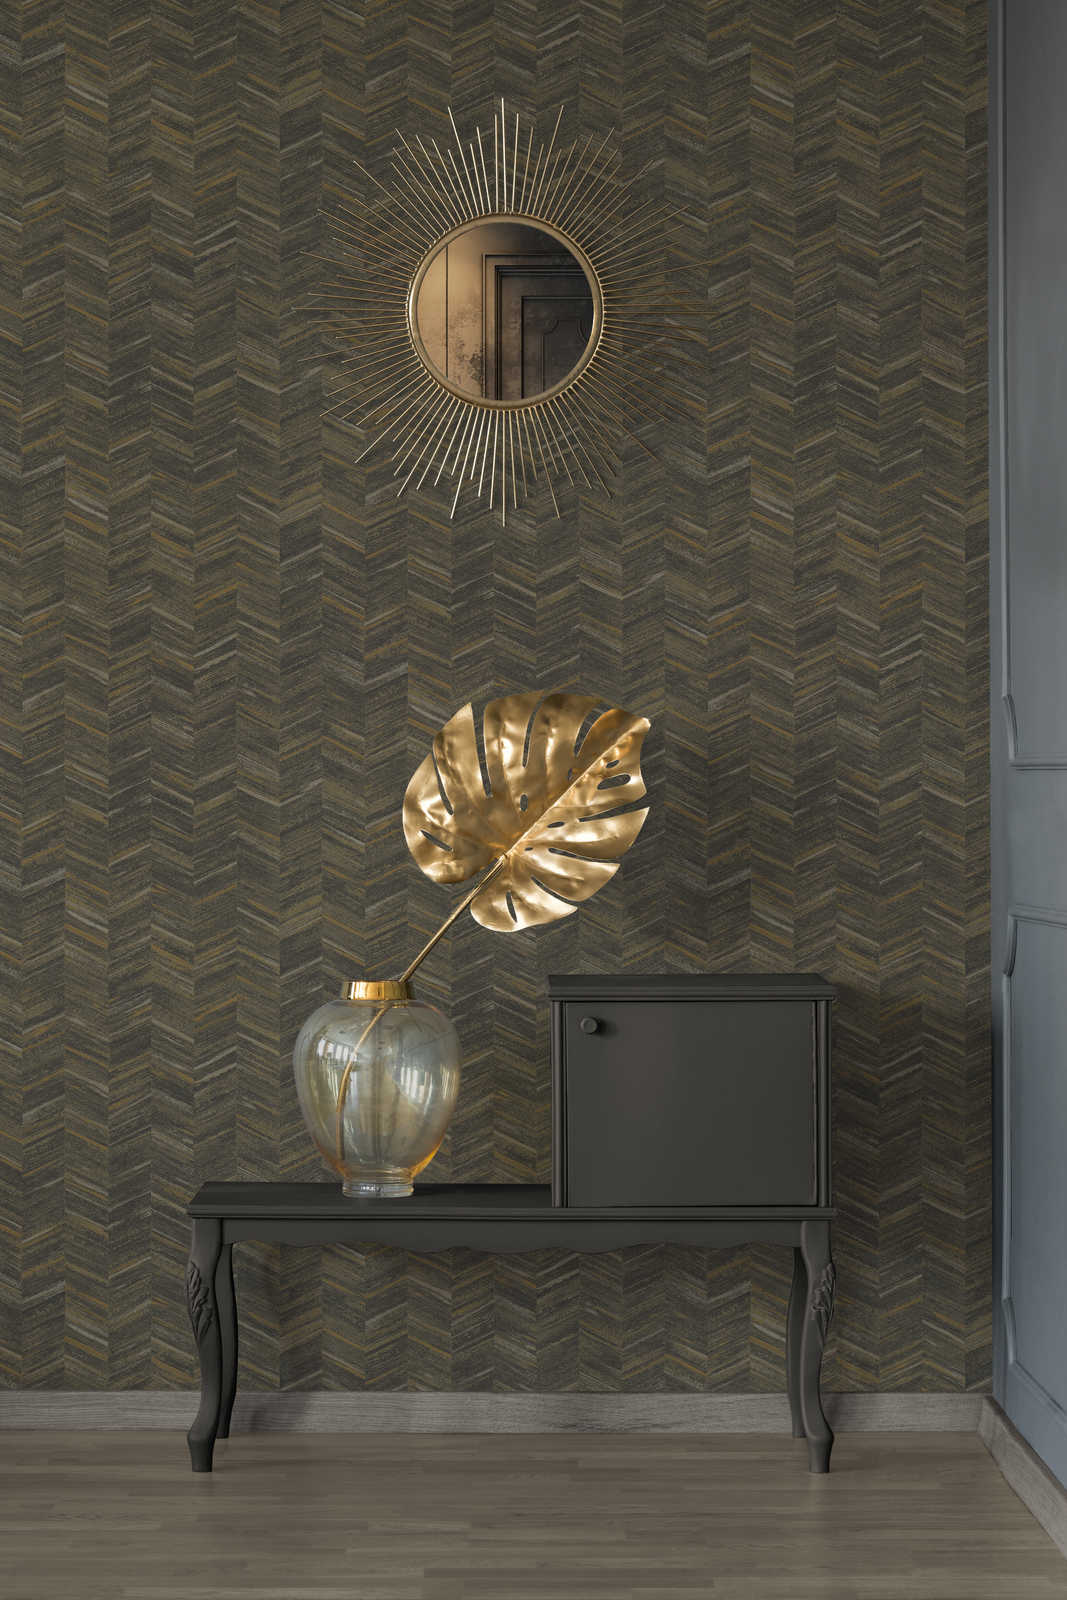             Textured wallpaper non-woven with wood effect & herringbone pattern - brown, metallic
        